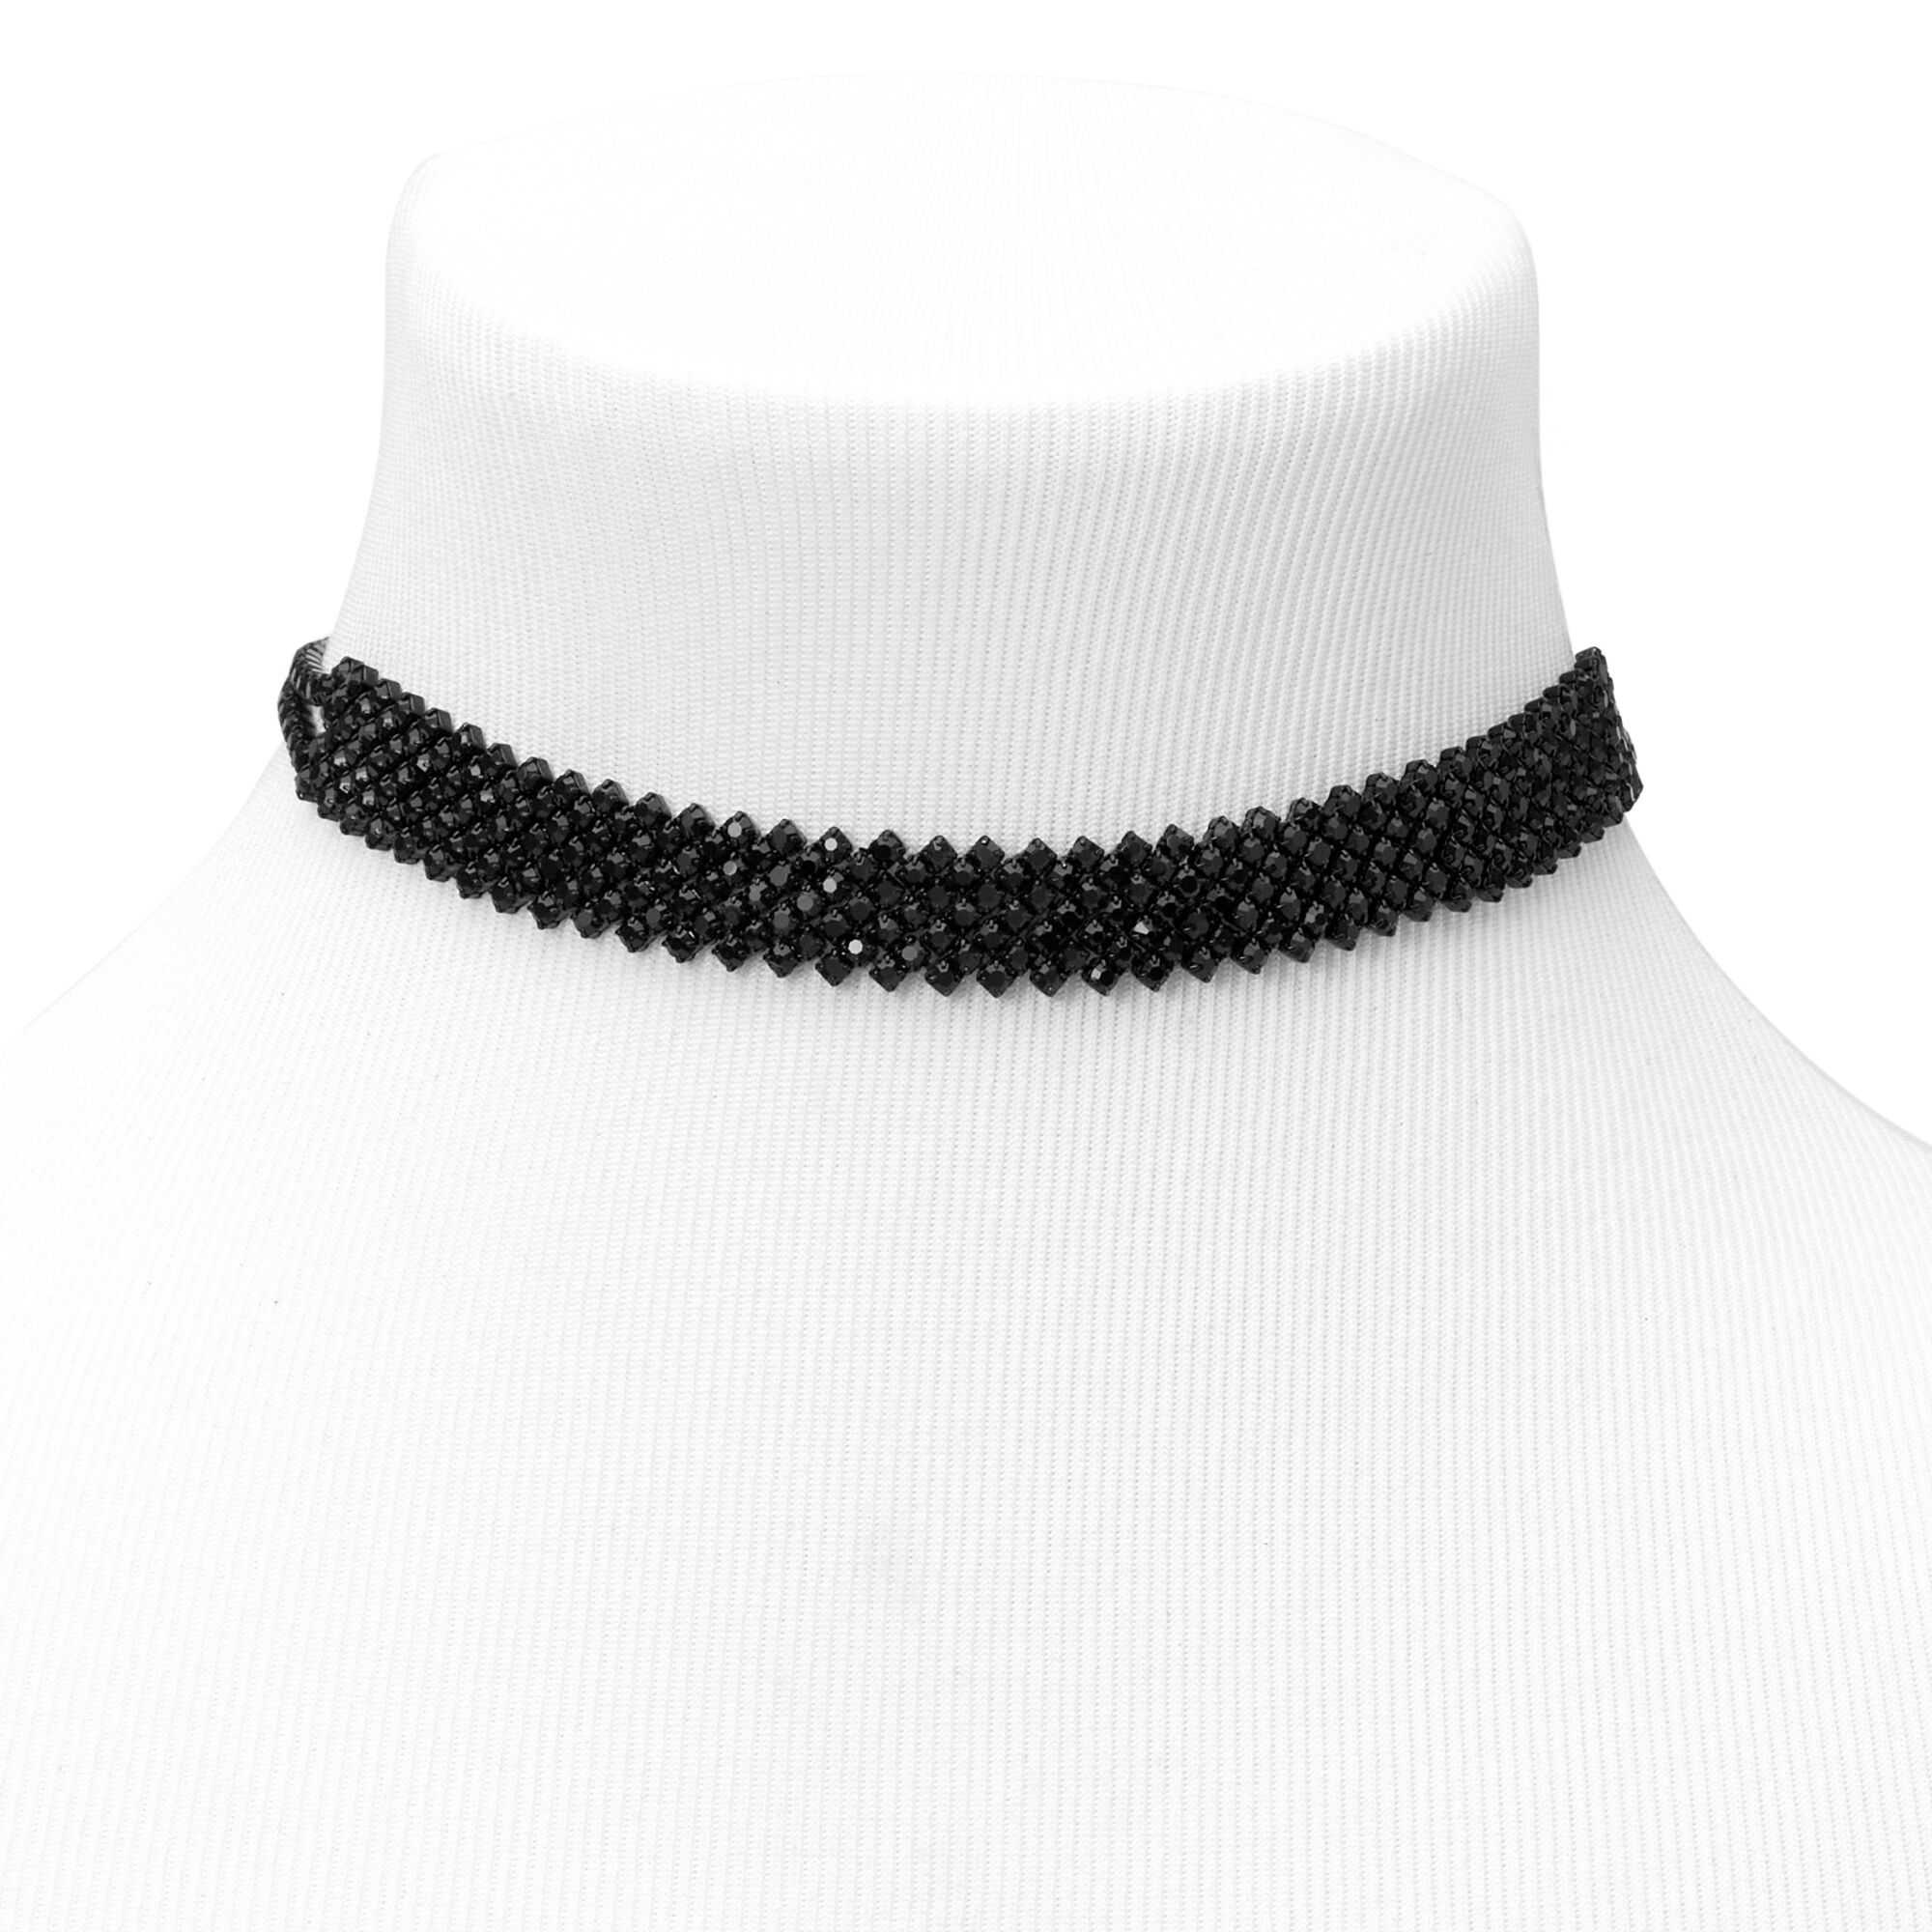 Pretty Rhinestone Necklace - Black Necklace - Beaded Necklace - $24.00 -  Lulus